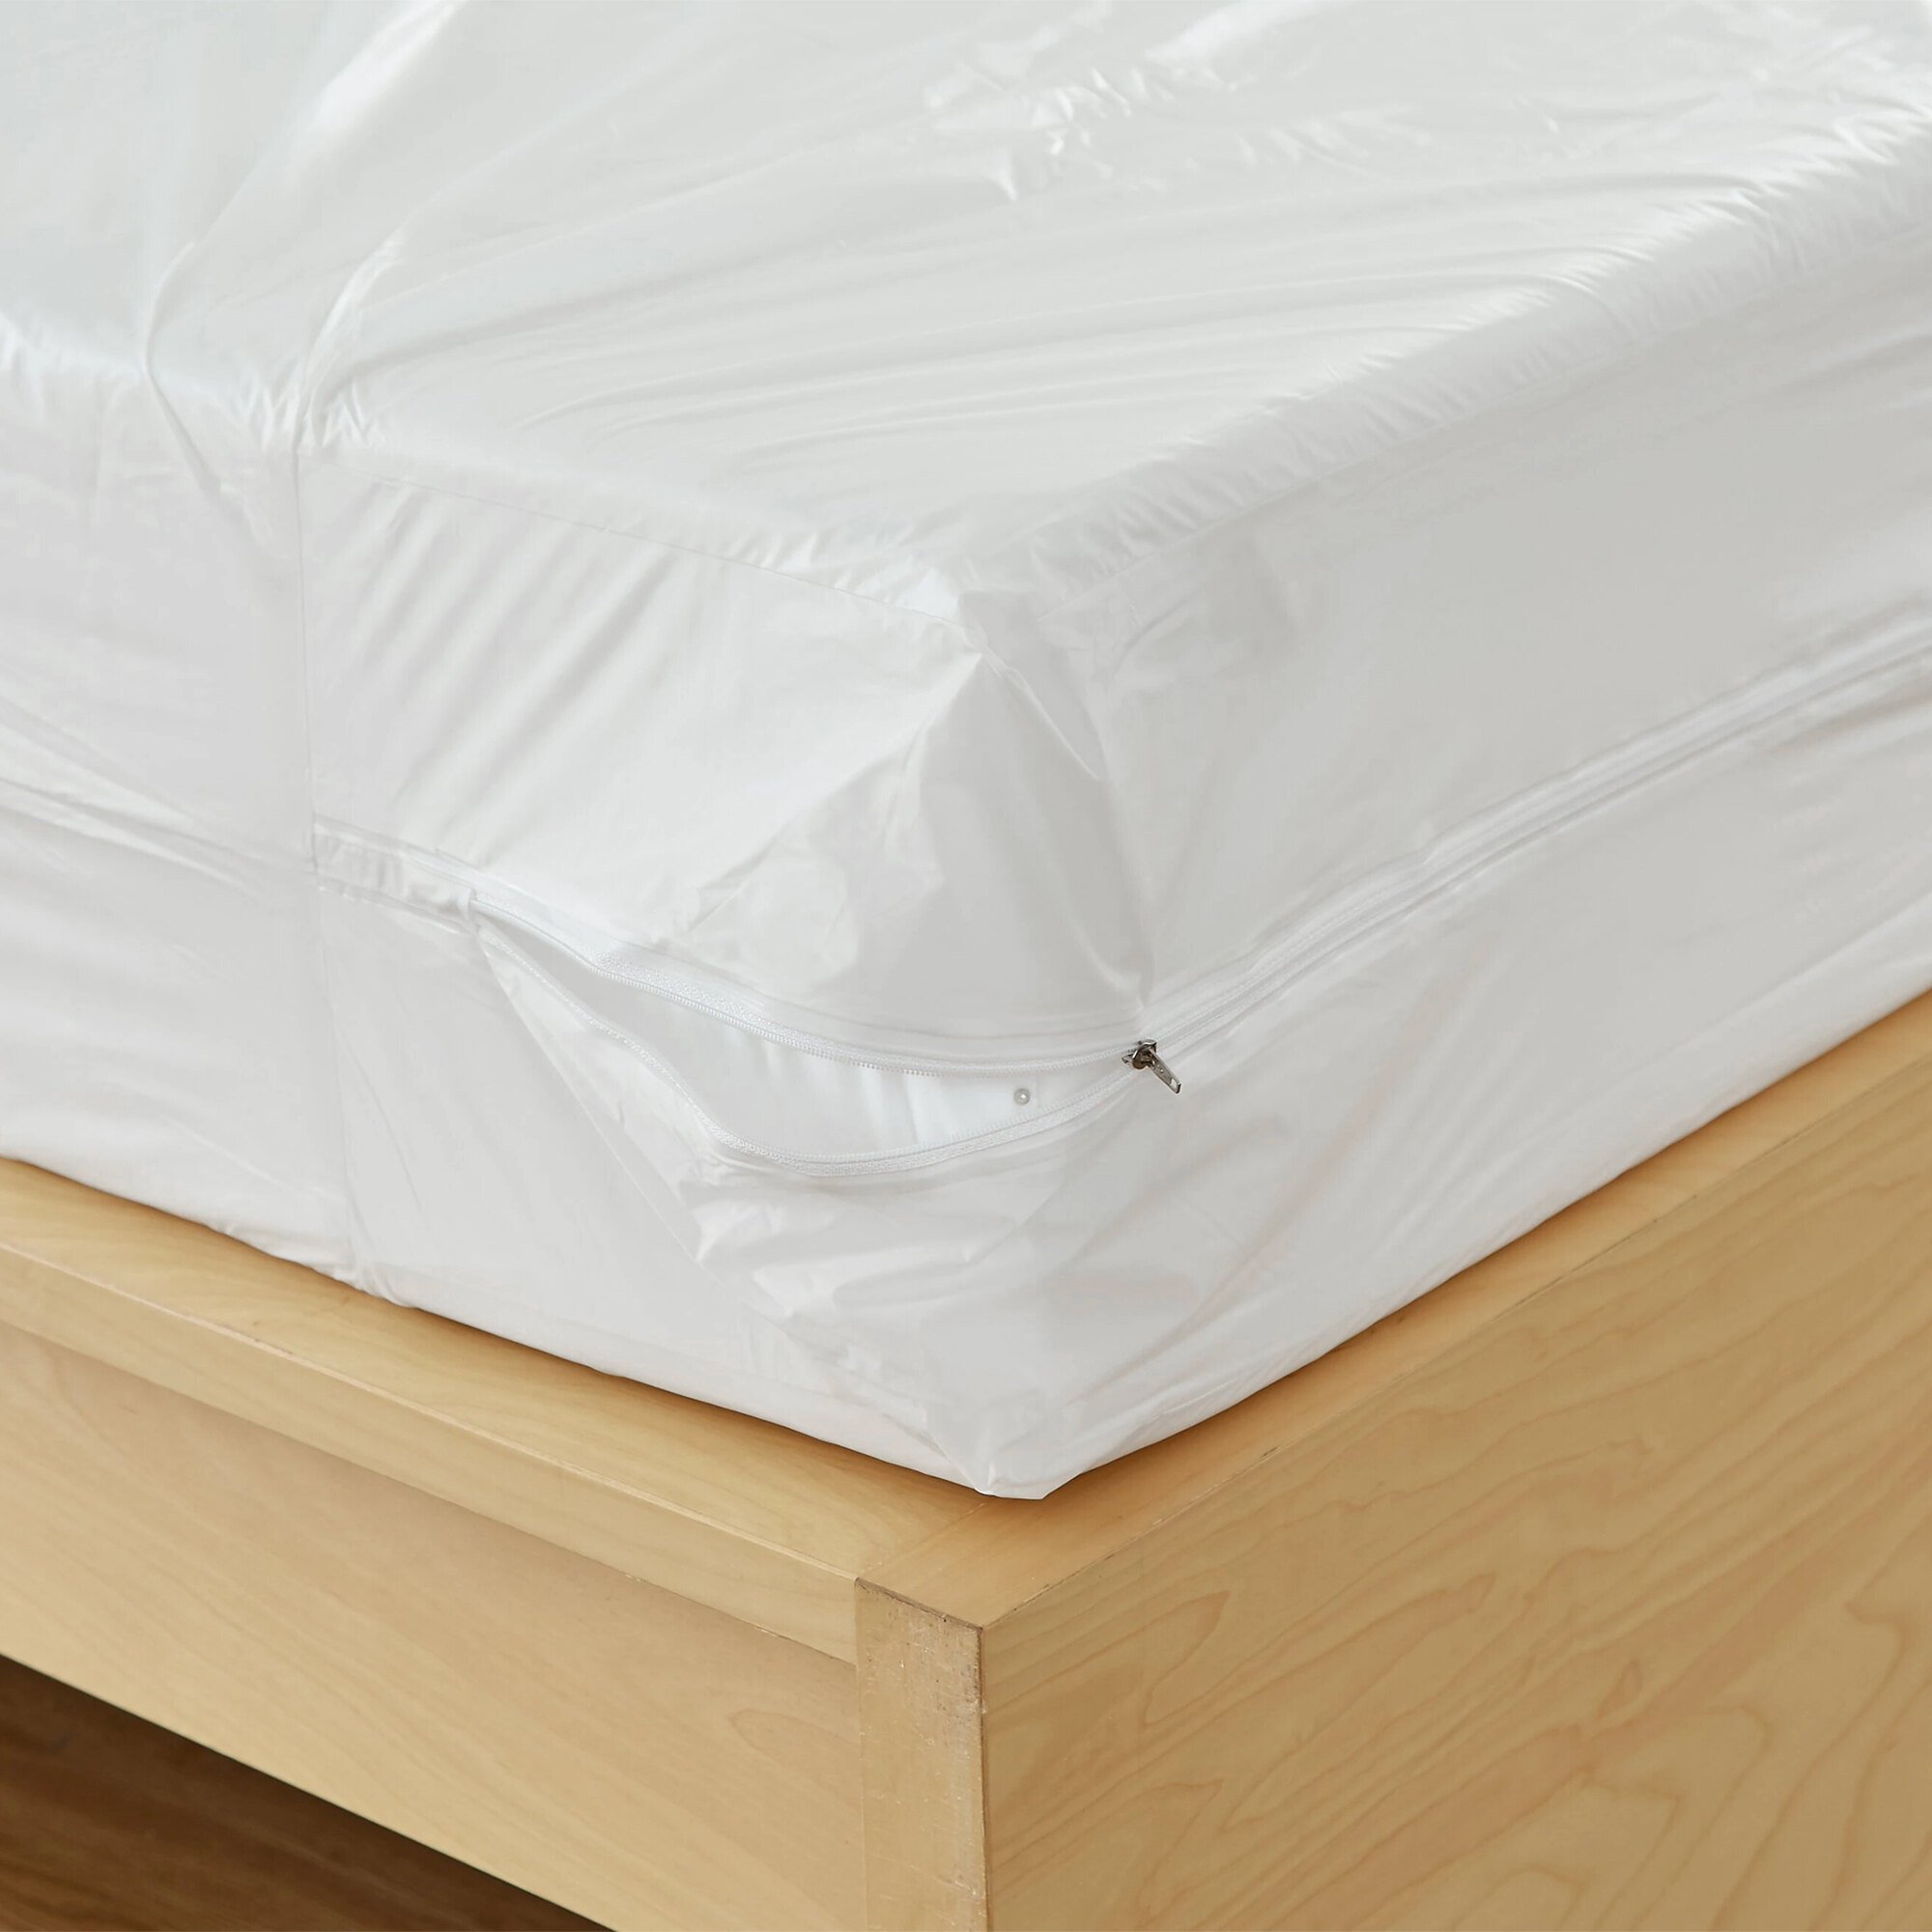 bed bug bag for mattress